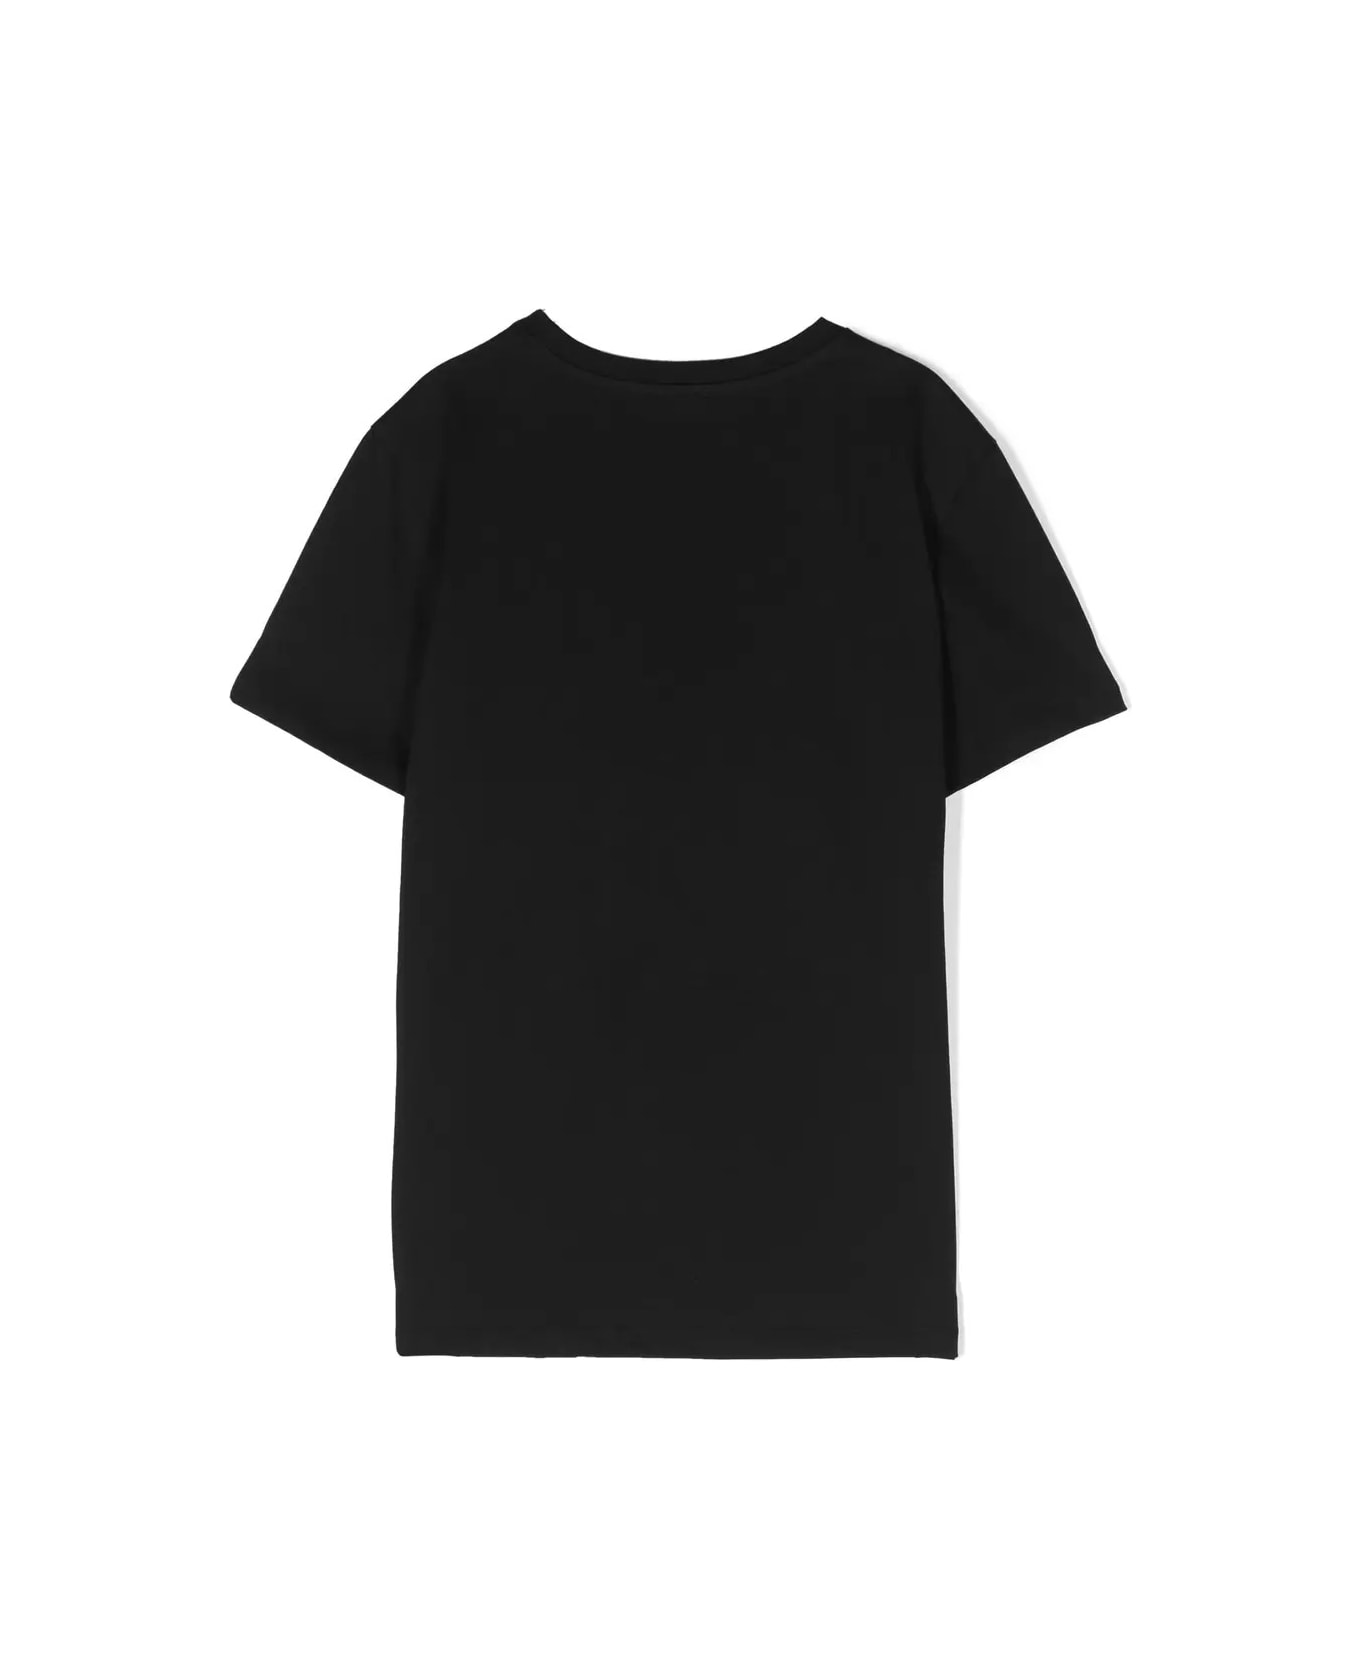 Balmain Black T-shirt With Circular Logo - Black